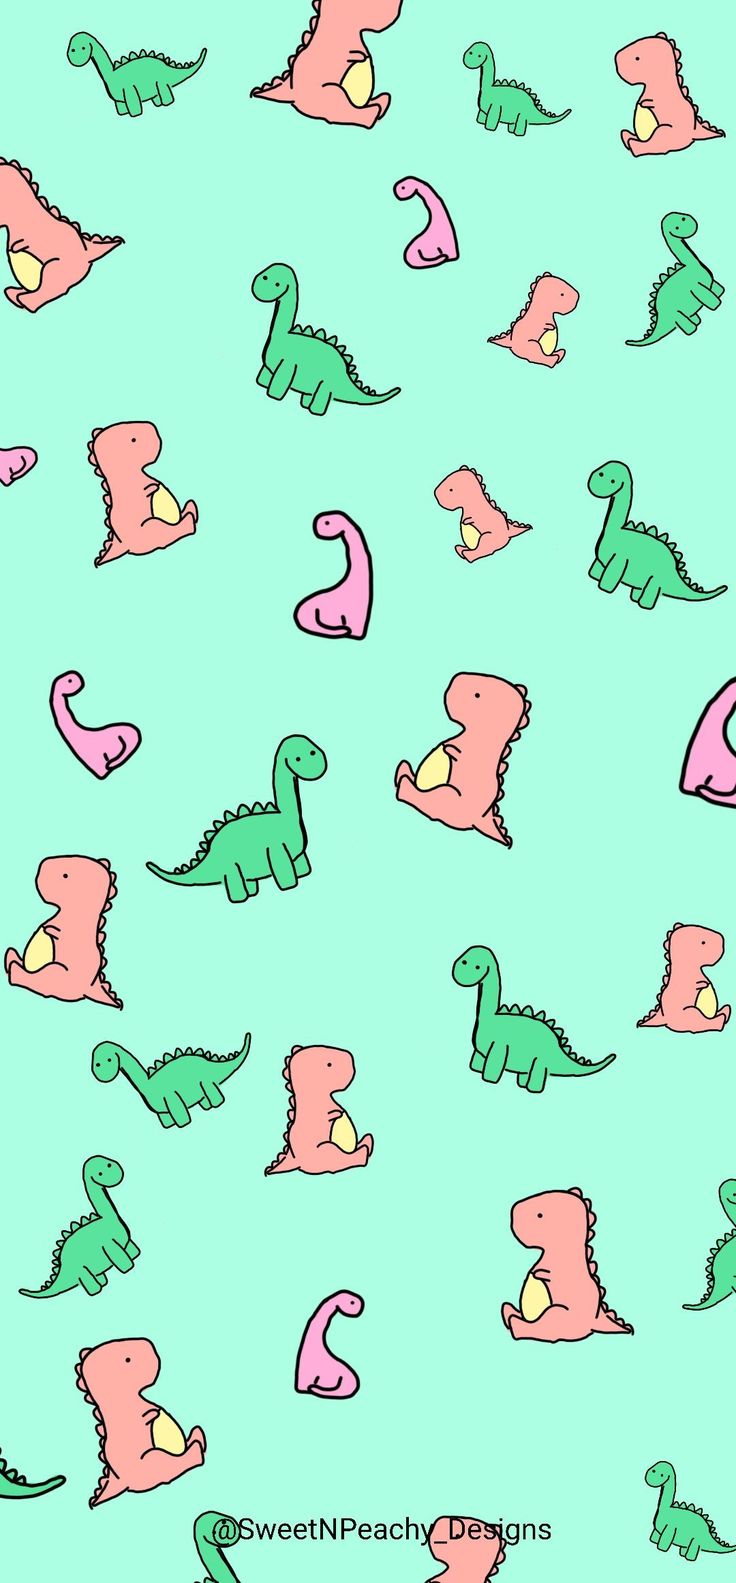 Dinosaur Iphone Wallpapers